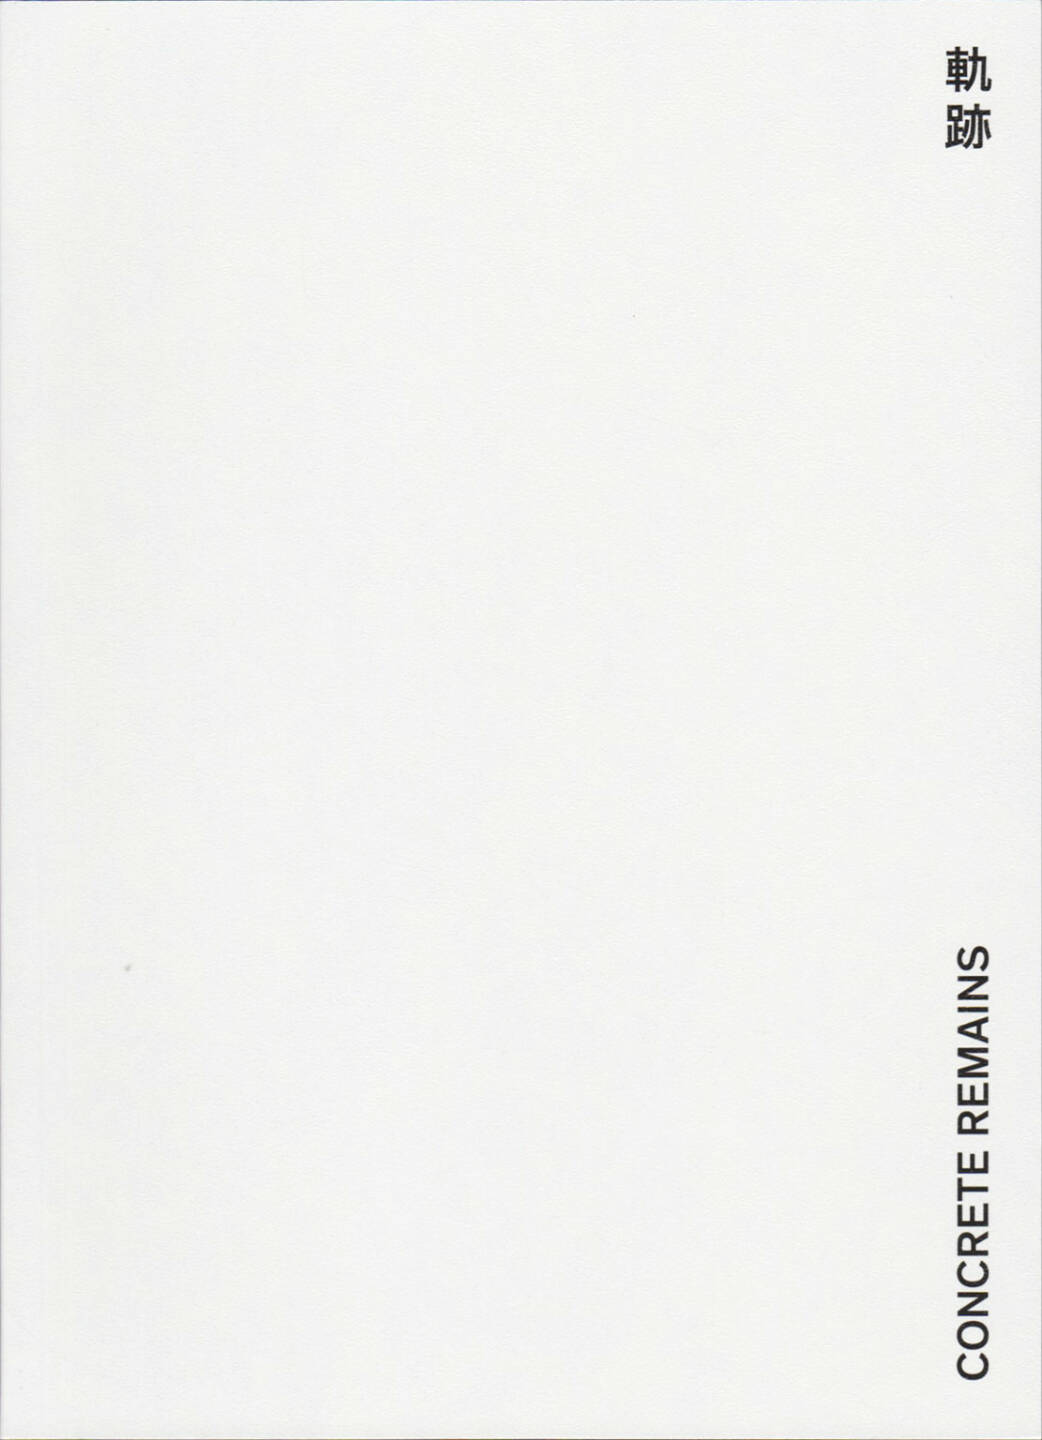 Johannes Ernst - Concrete Remains 軌跡, Self published 2015, Cover - http://josefchladek.com/book/johannes_ernst_-_concrete_remains_軌跡